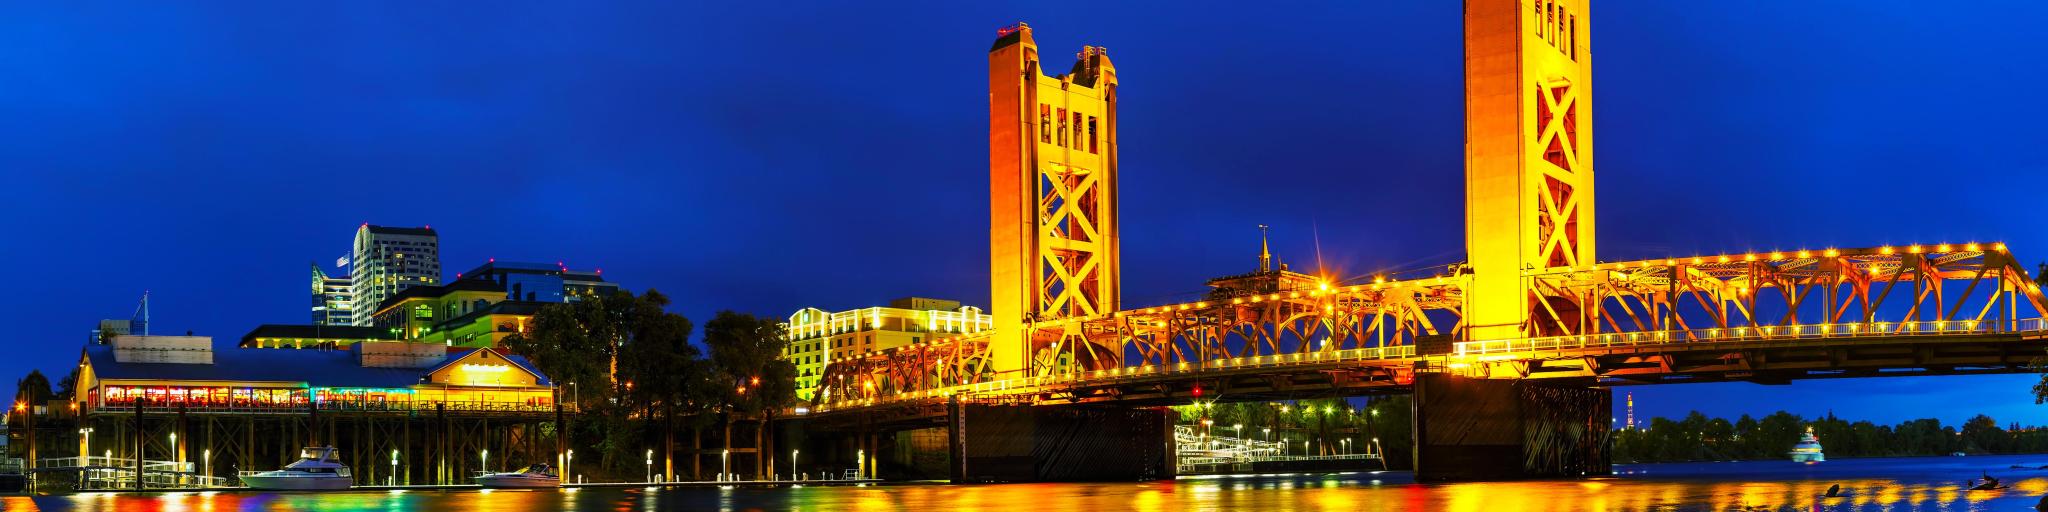 Sacramento, California, USA  with a panorama of Golden Gates drawbridge in Sacramento at night.